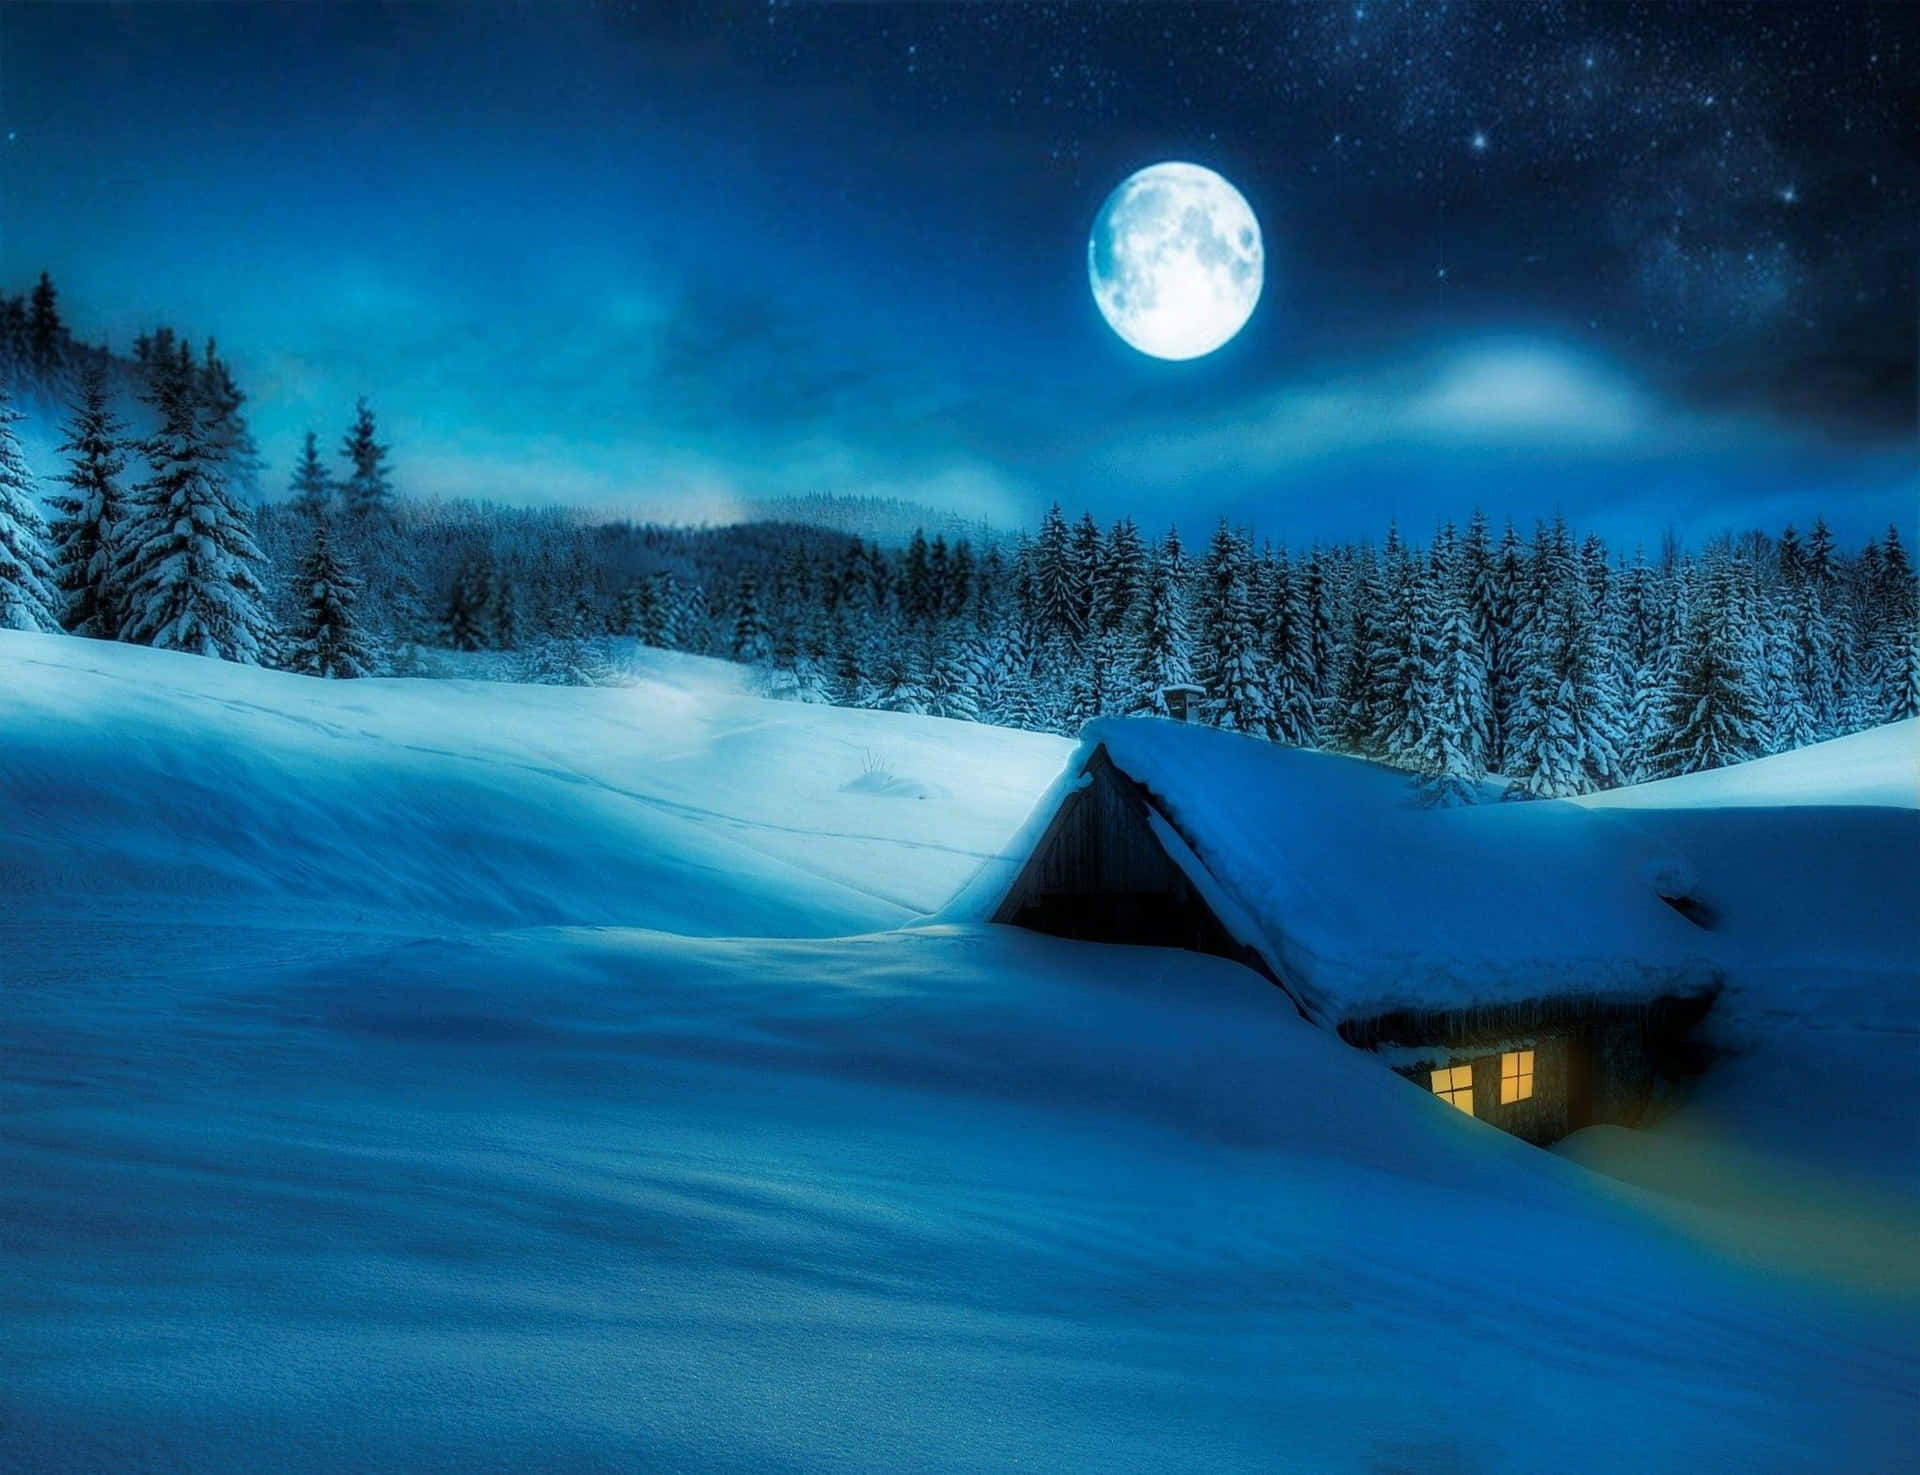 Stare into the beauty of an illuminated winter night Wallpaper